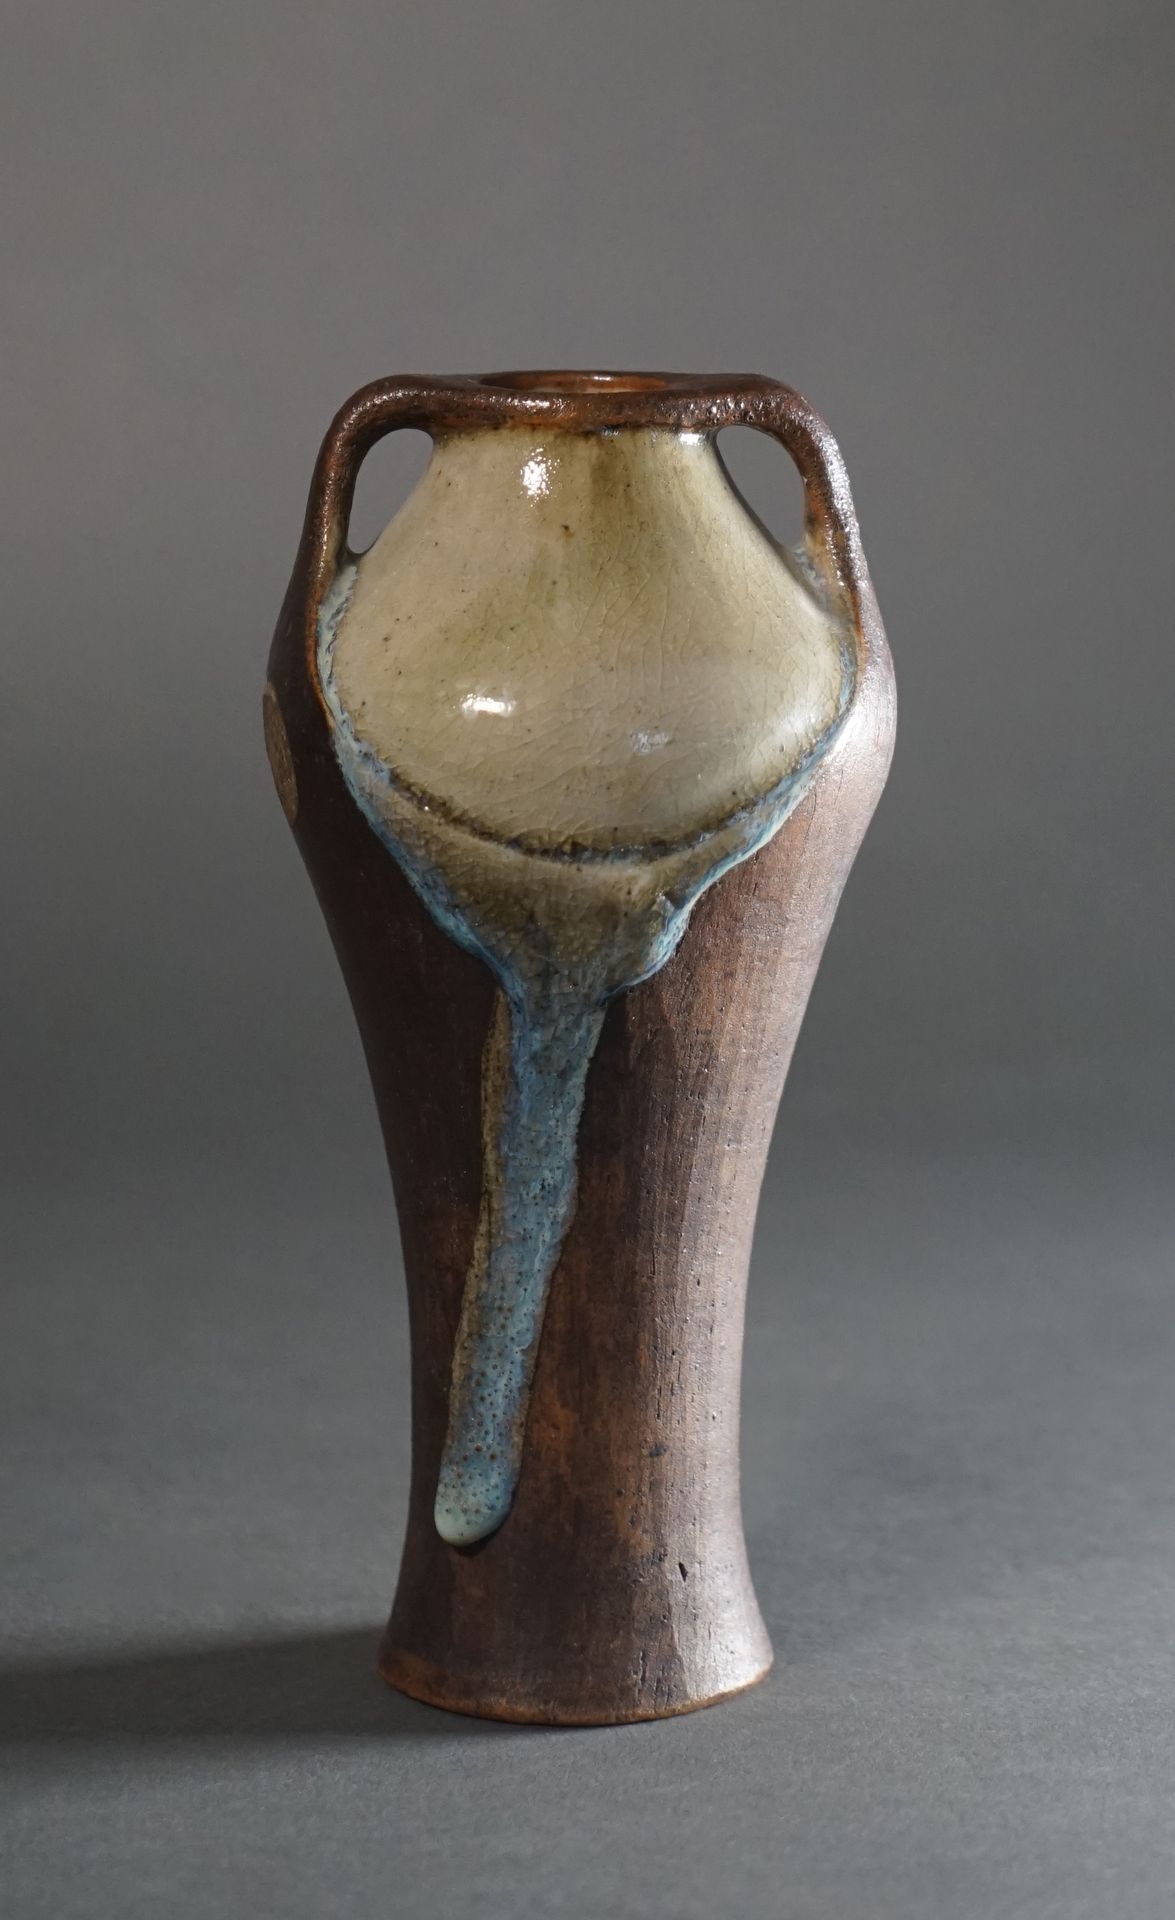 Null 拉乌尔-拉切纳尔（1885-1956 年）棕色石器双柄柱形花瓶，青瓷釉和蓝釉。底部有 R Lachenal 原印。高 19 厘米 底部有轻微缺口